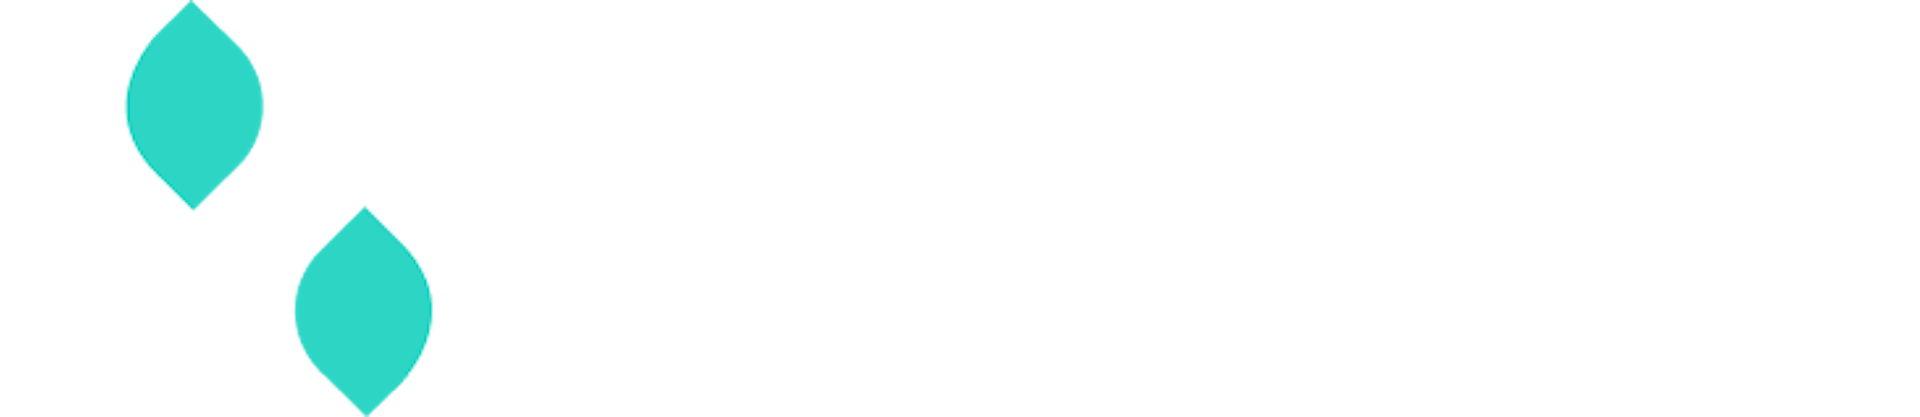 Spreedly Logo 1